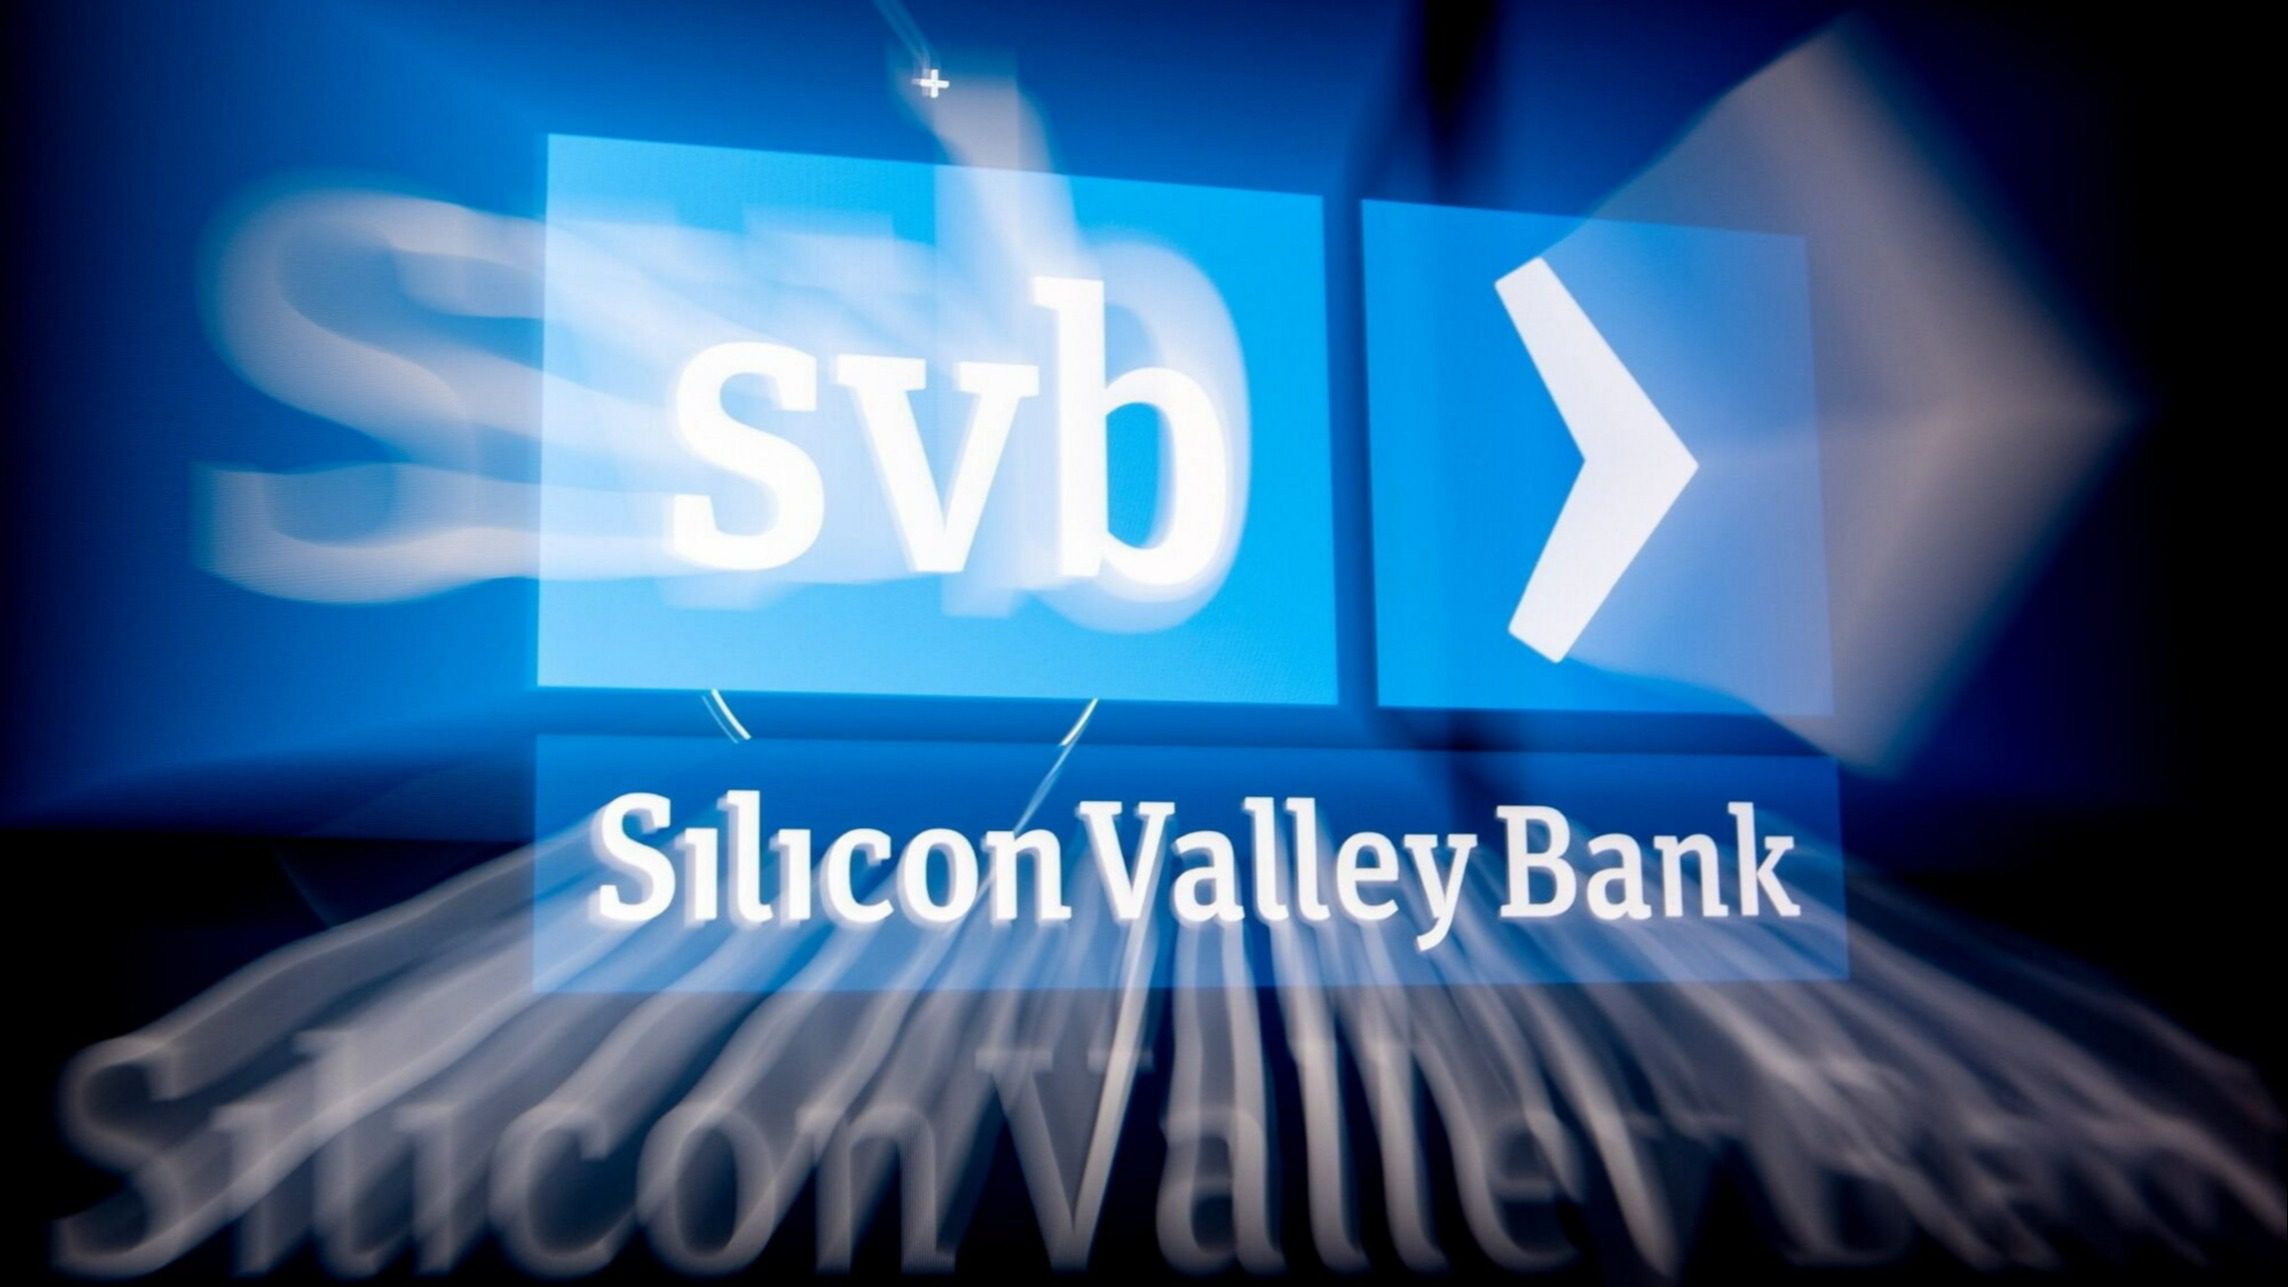 Silicon Valley Bank: Tι σημαίνει η κατάρρευση της για το παγκόσμιο χρηματοπιστωτικό σύστημα – Οι υποψήφιοι αγοραστές